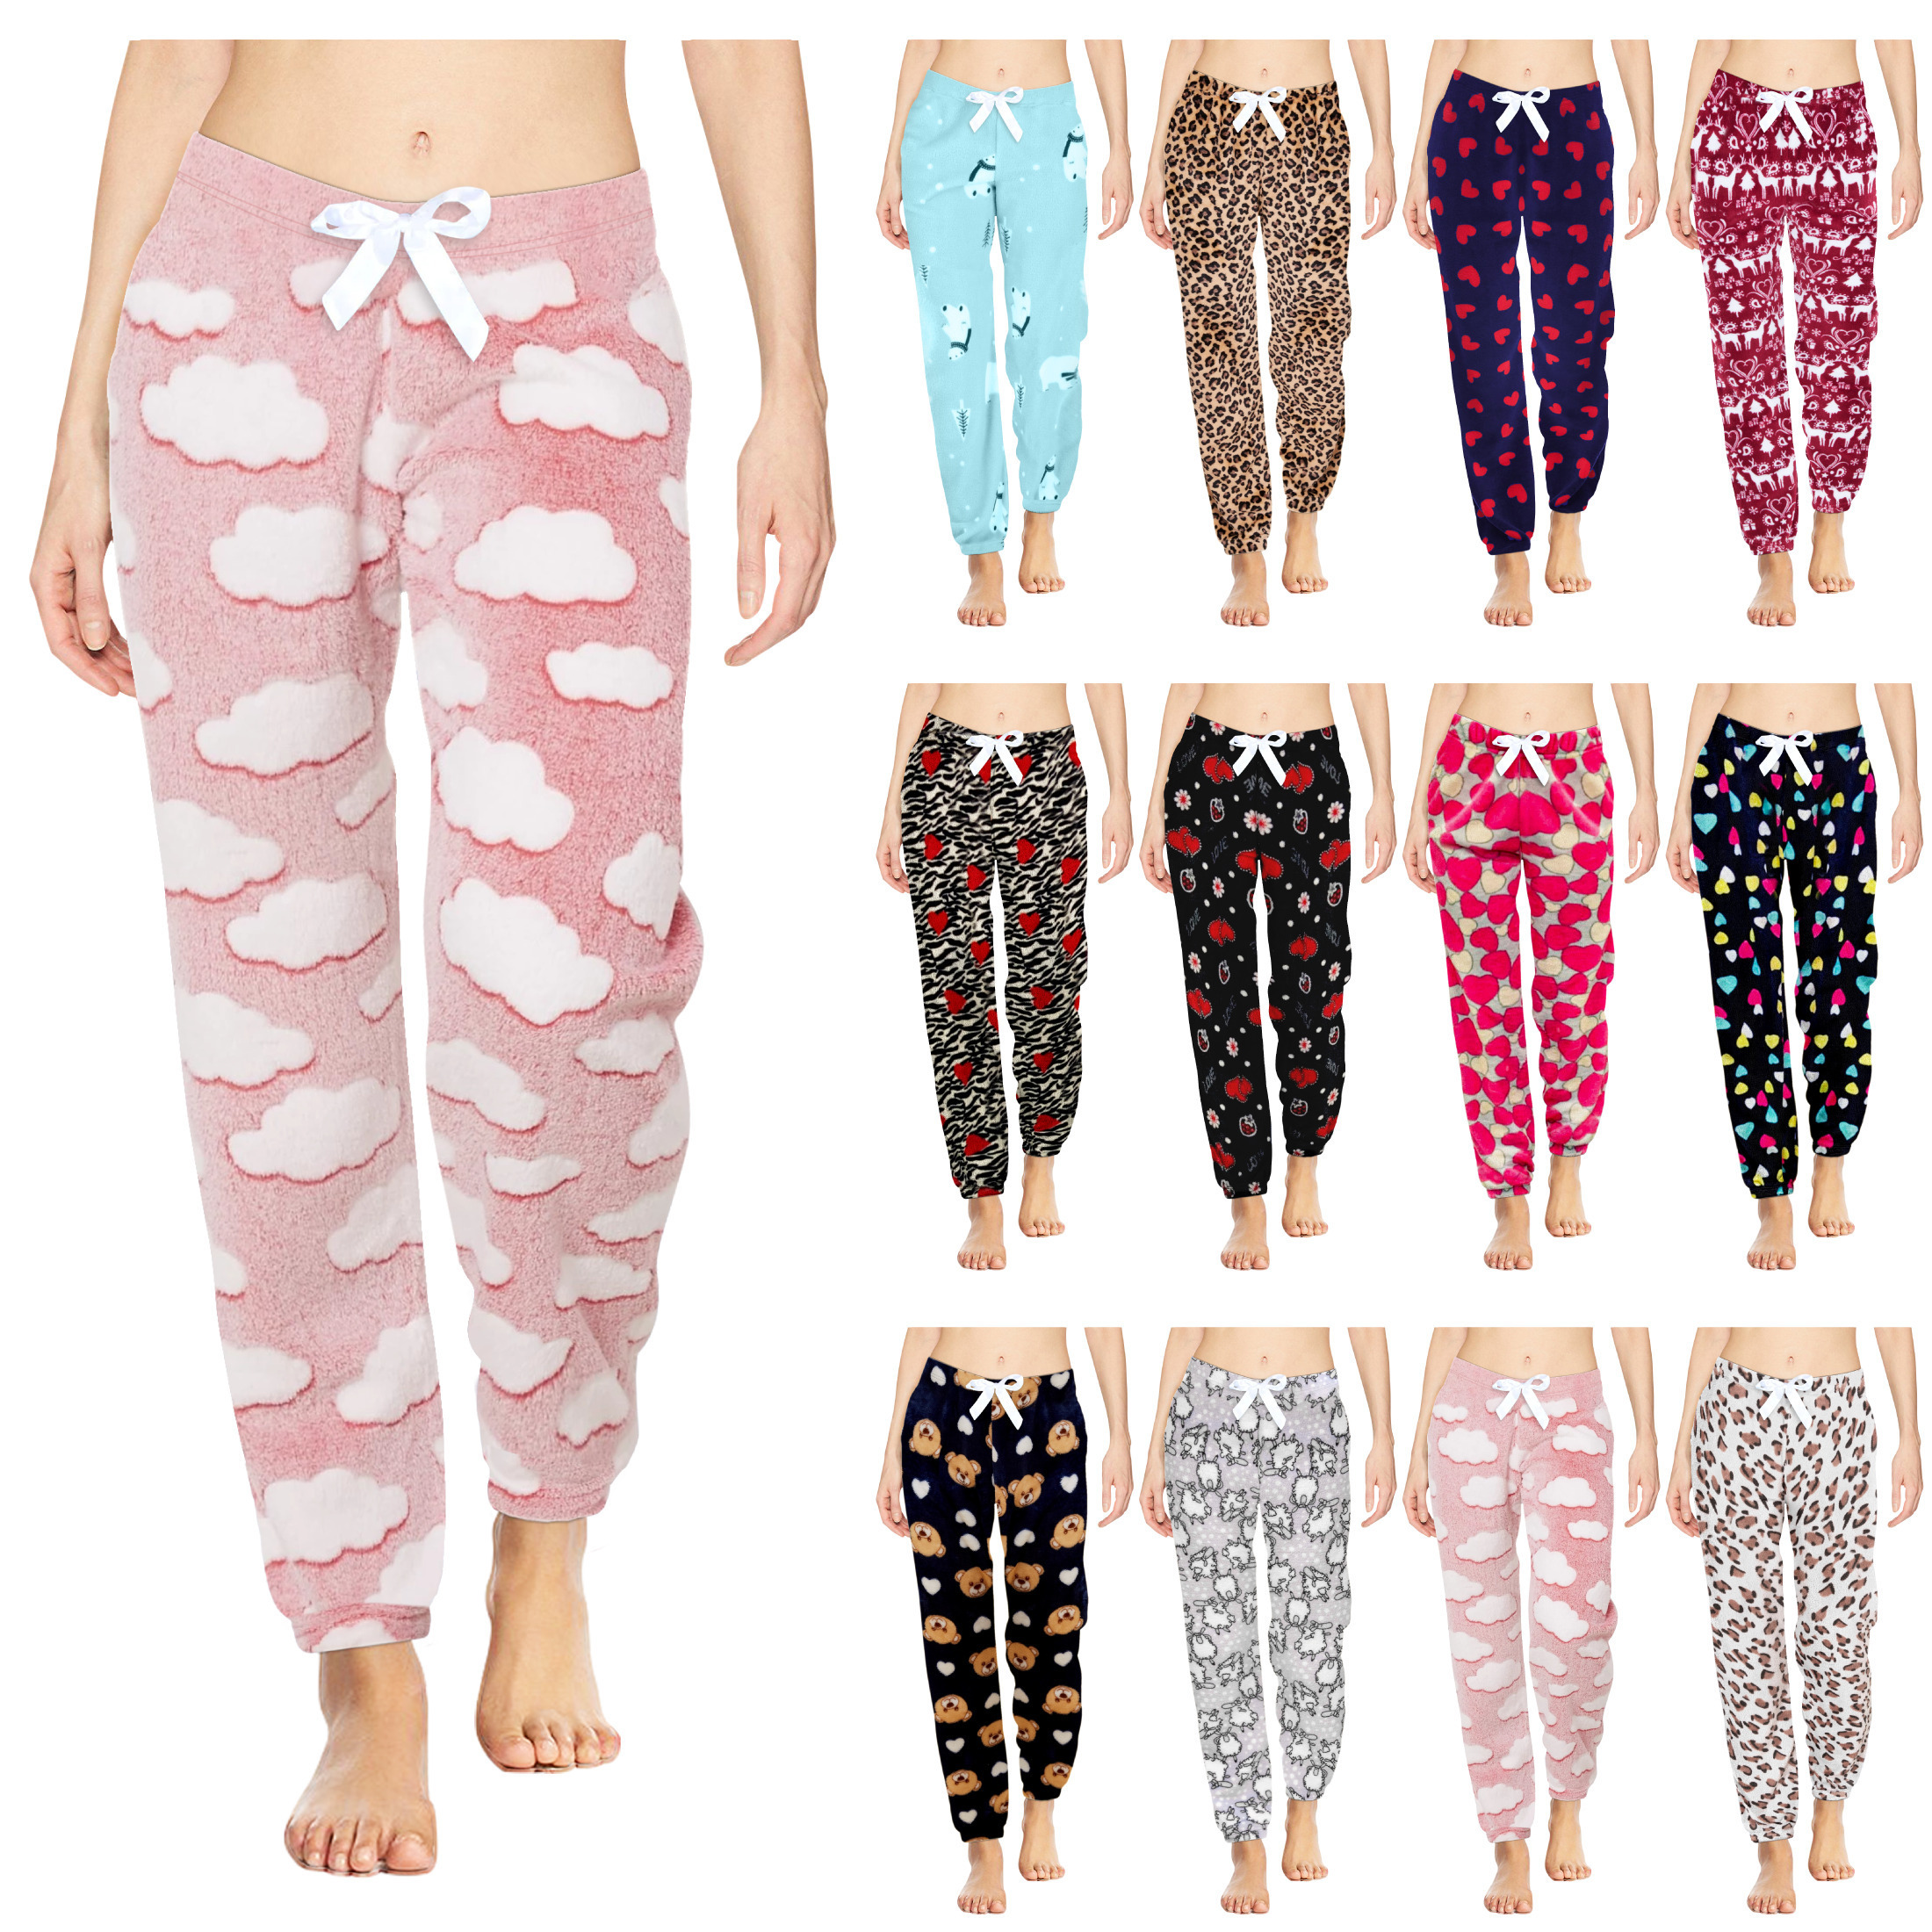 3-Pack: Women's Ultra-Plush Micro Fleece Fuzzy Pajama Pants - Solid, Small